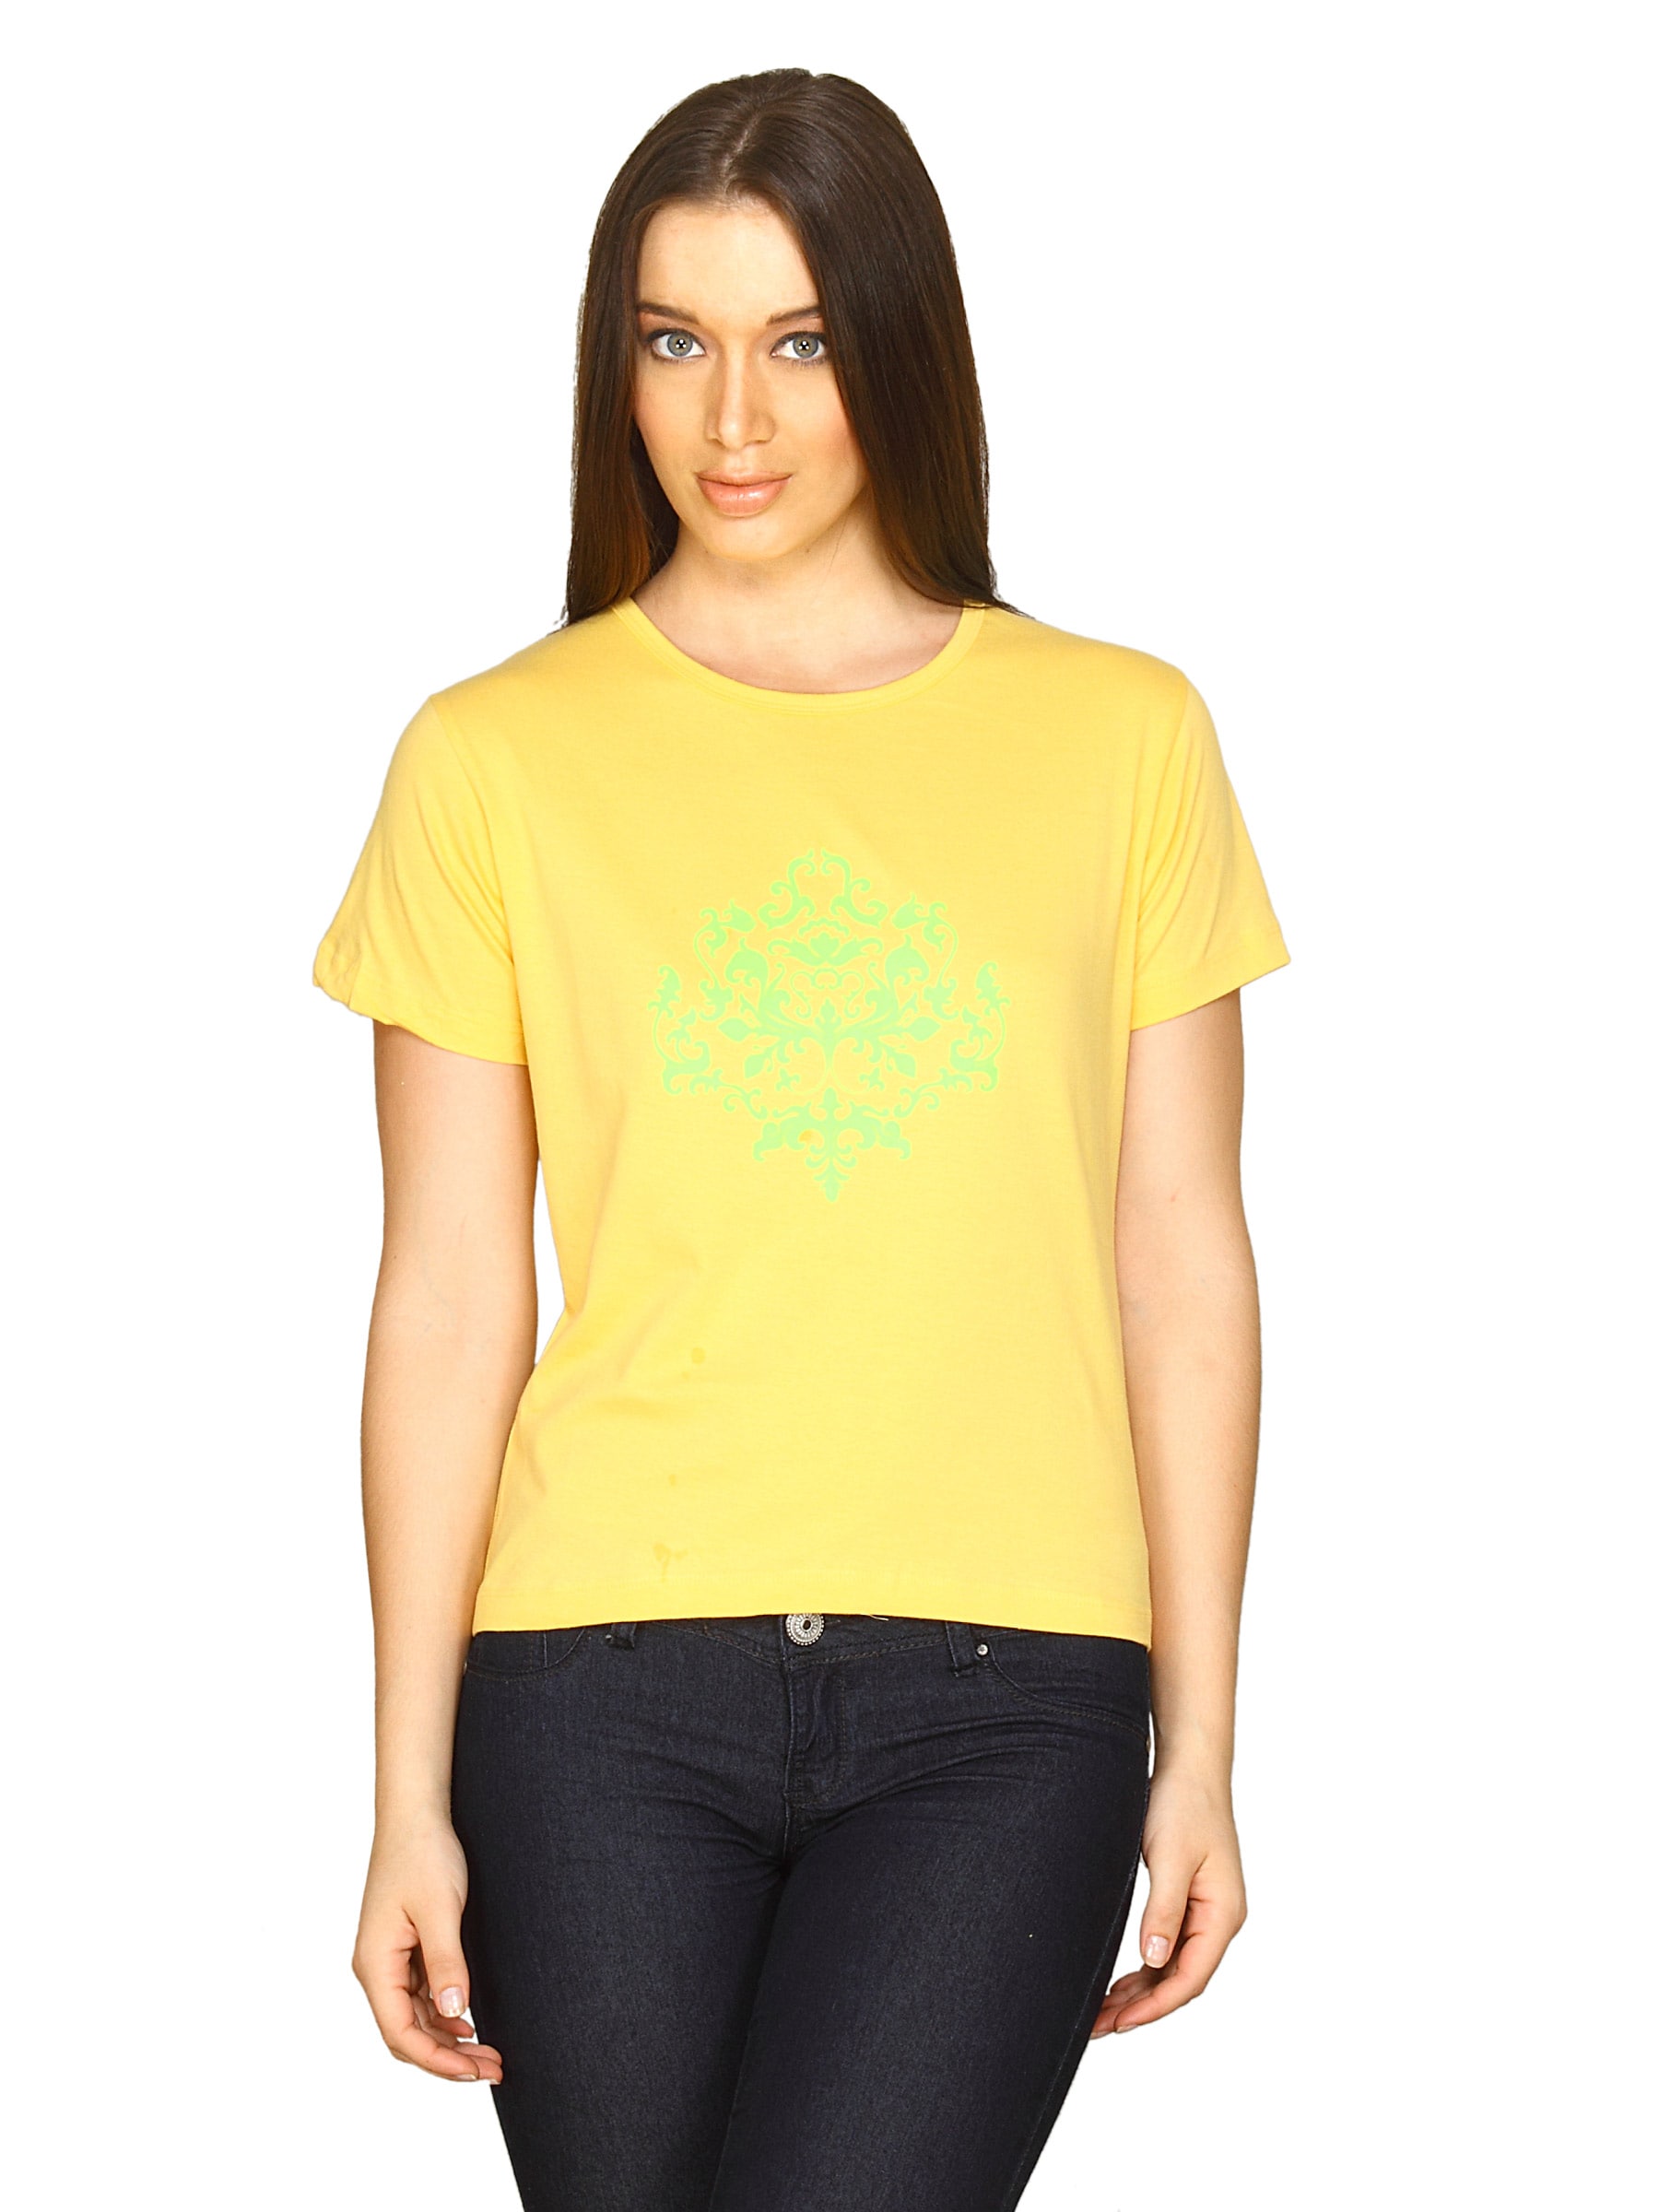 Tantra Women's Ornament Yellow T-shirt